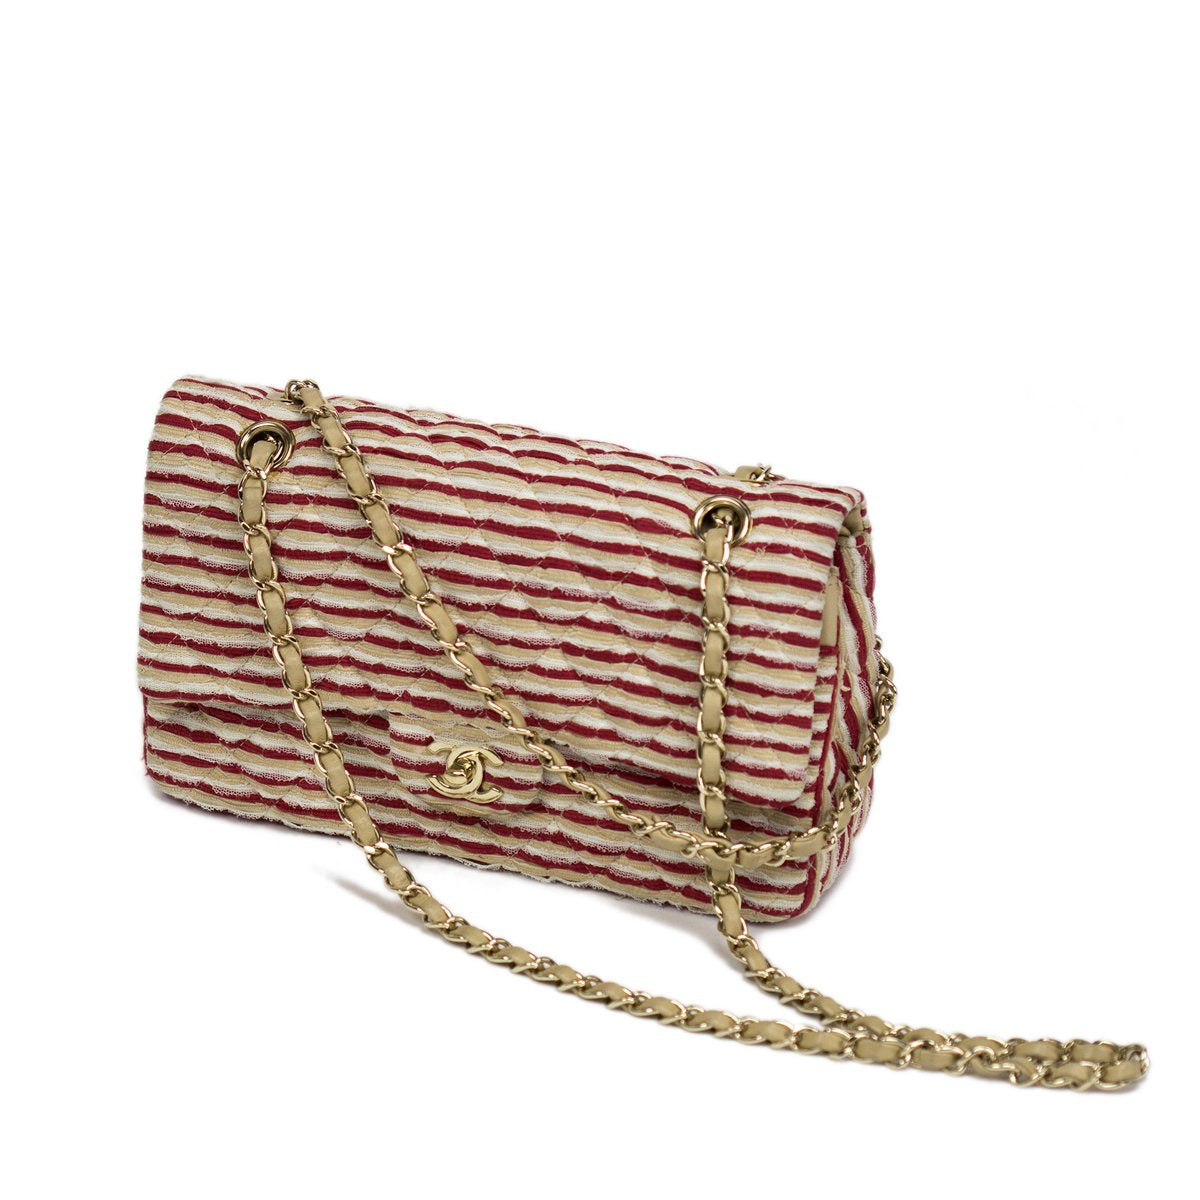 chanel striped bag